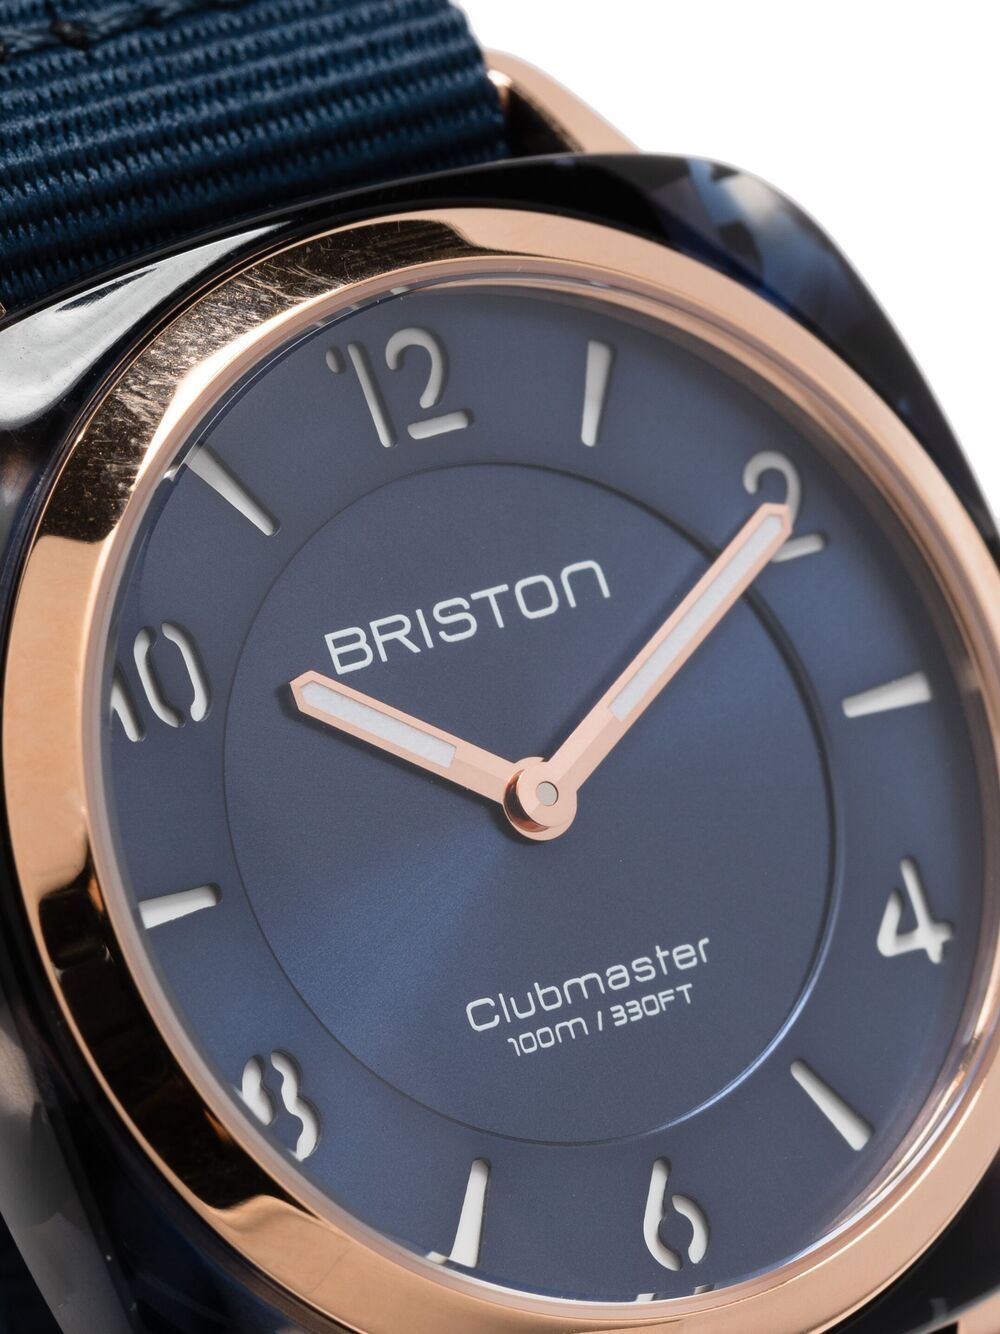 фото Briston watches наручные часы clubmaster chic 36 мм